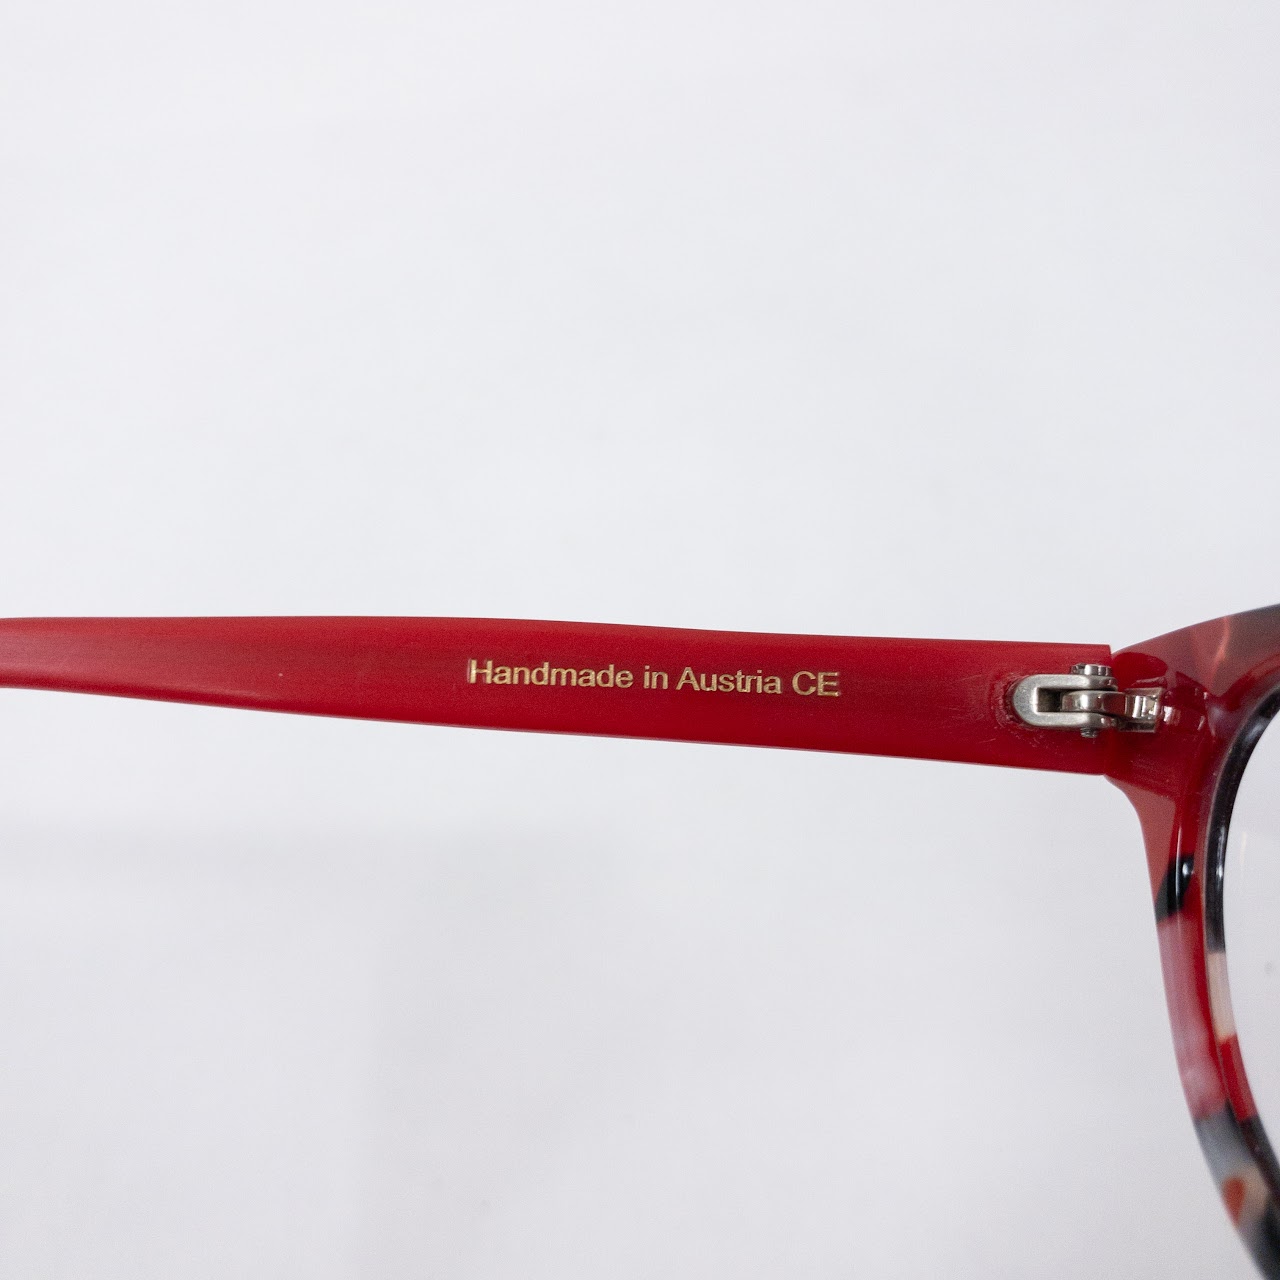 Lindberg Marbleized Cat-Eye Eyeglasses